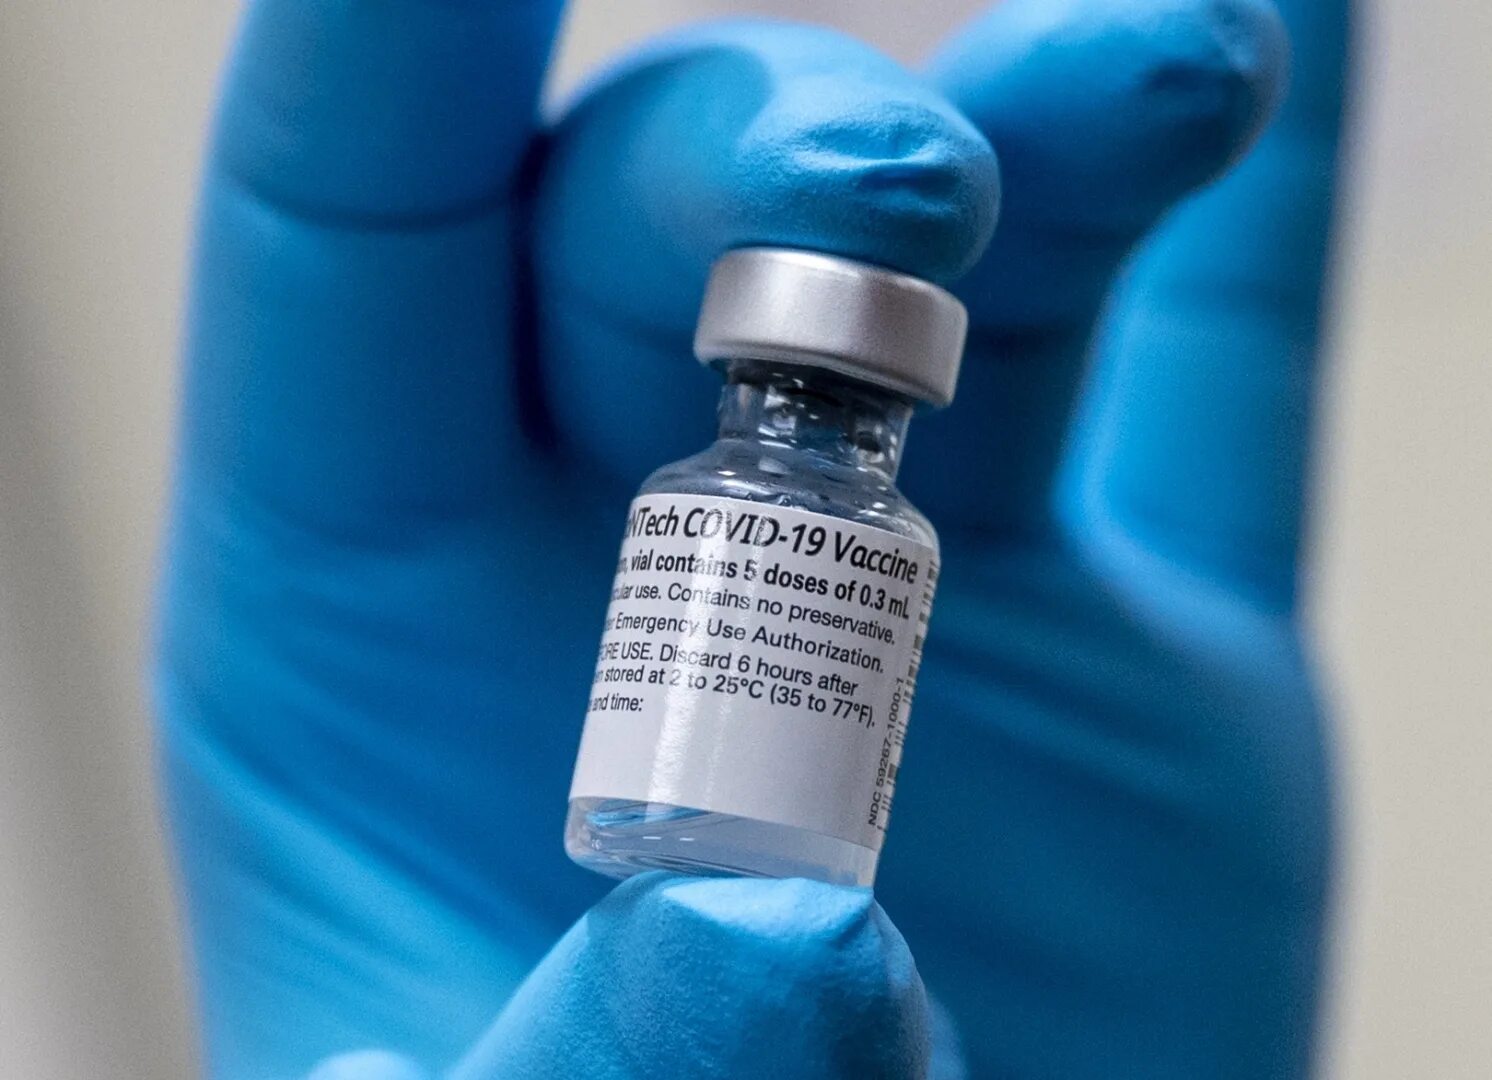 Вакцина против Covid-19. Файзер вакцина. Вакцина от коронавируса Pfizer/BIONTECH И moderna. Вакцина Pfizer/BIONTECH против Covid-19.